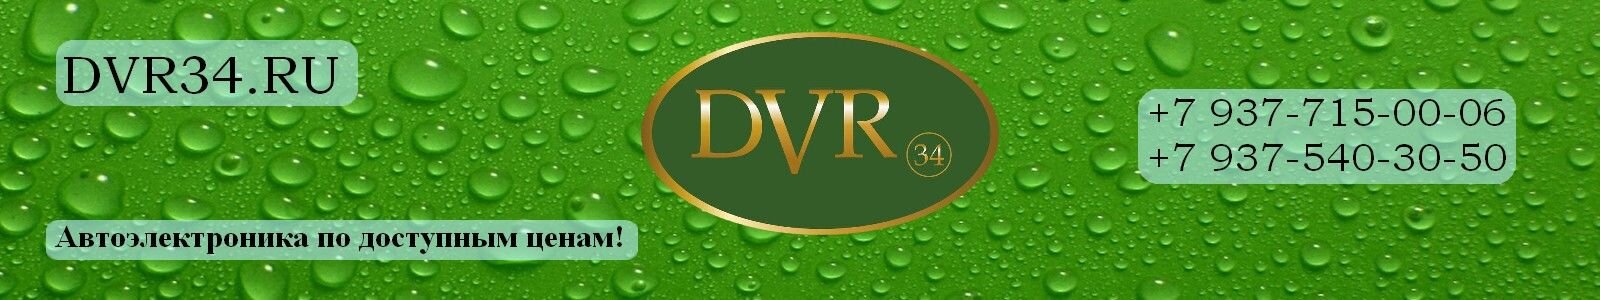 DVR34. RU